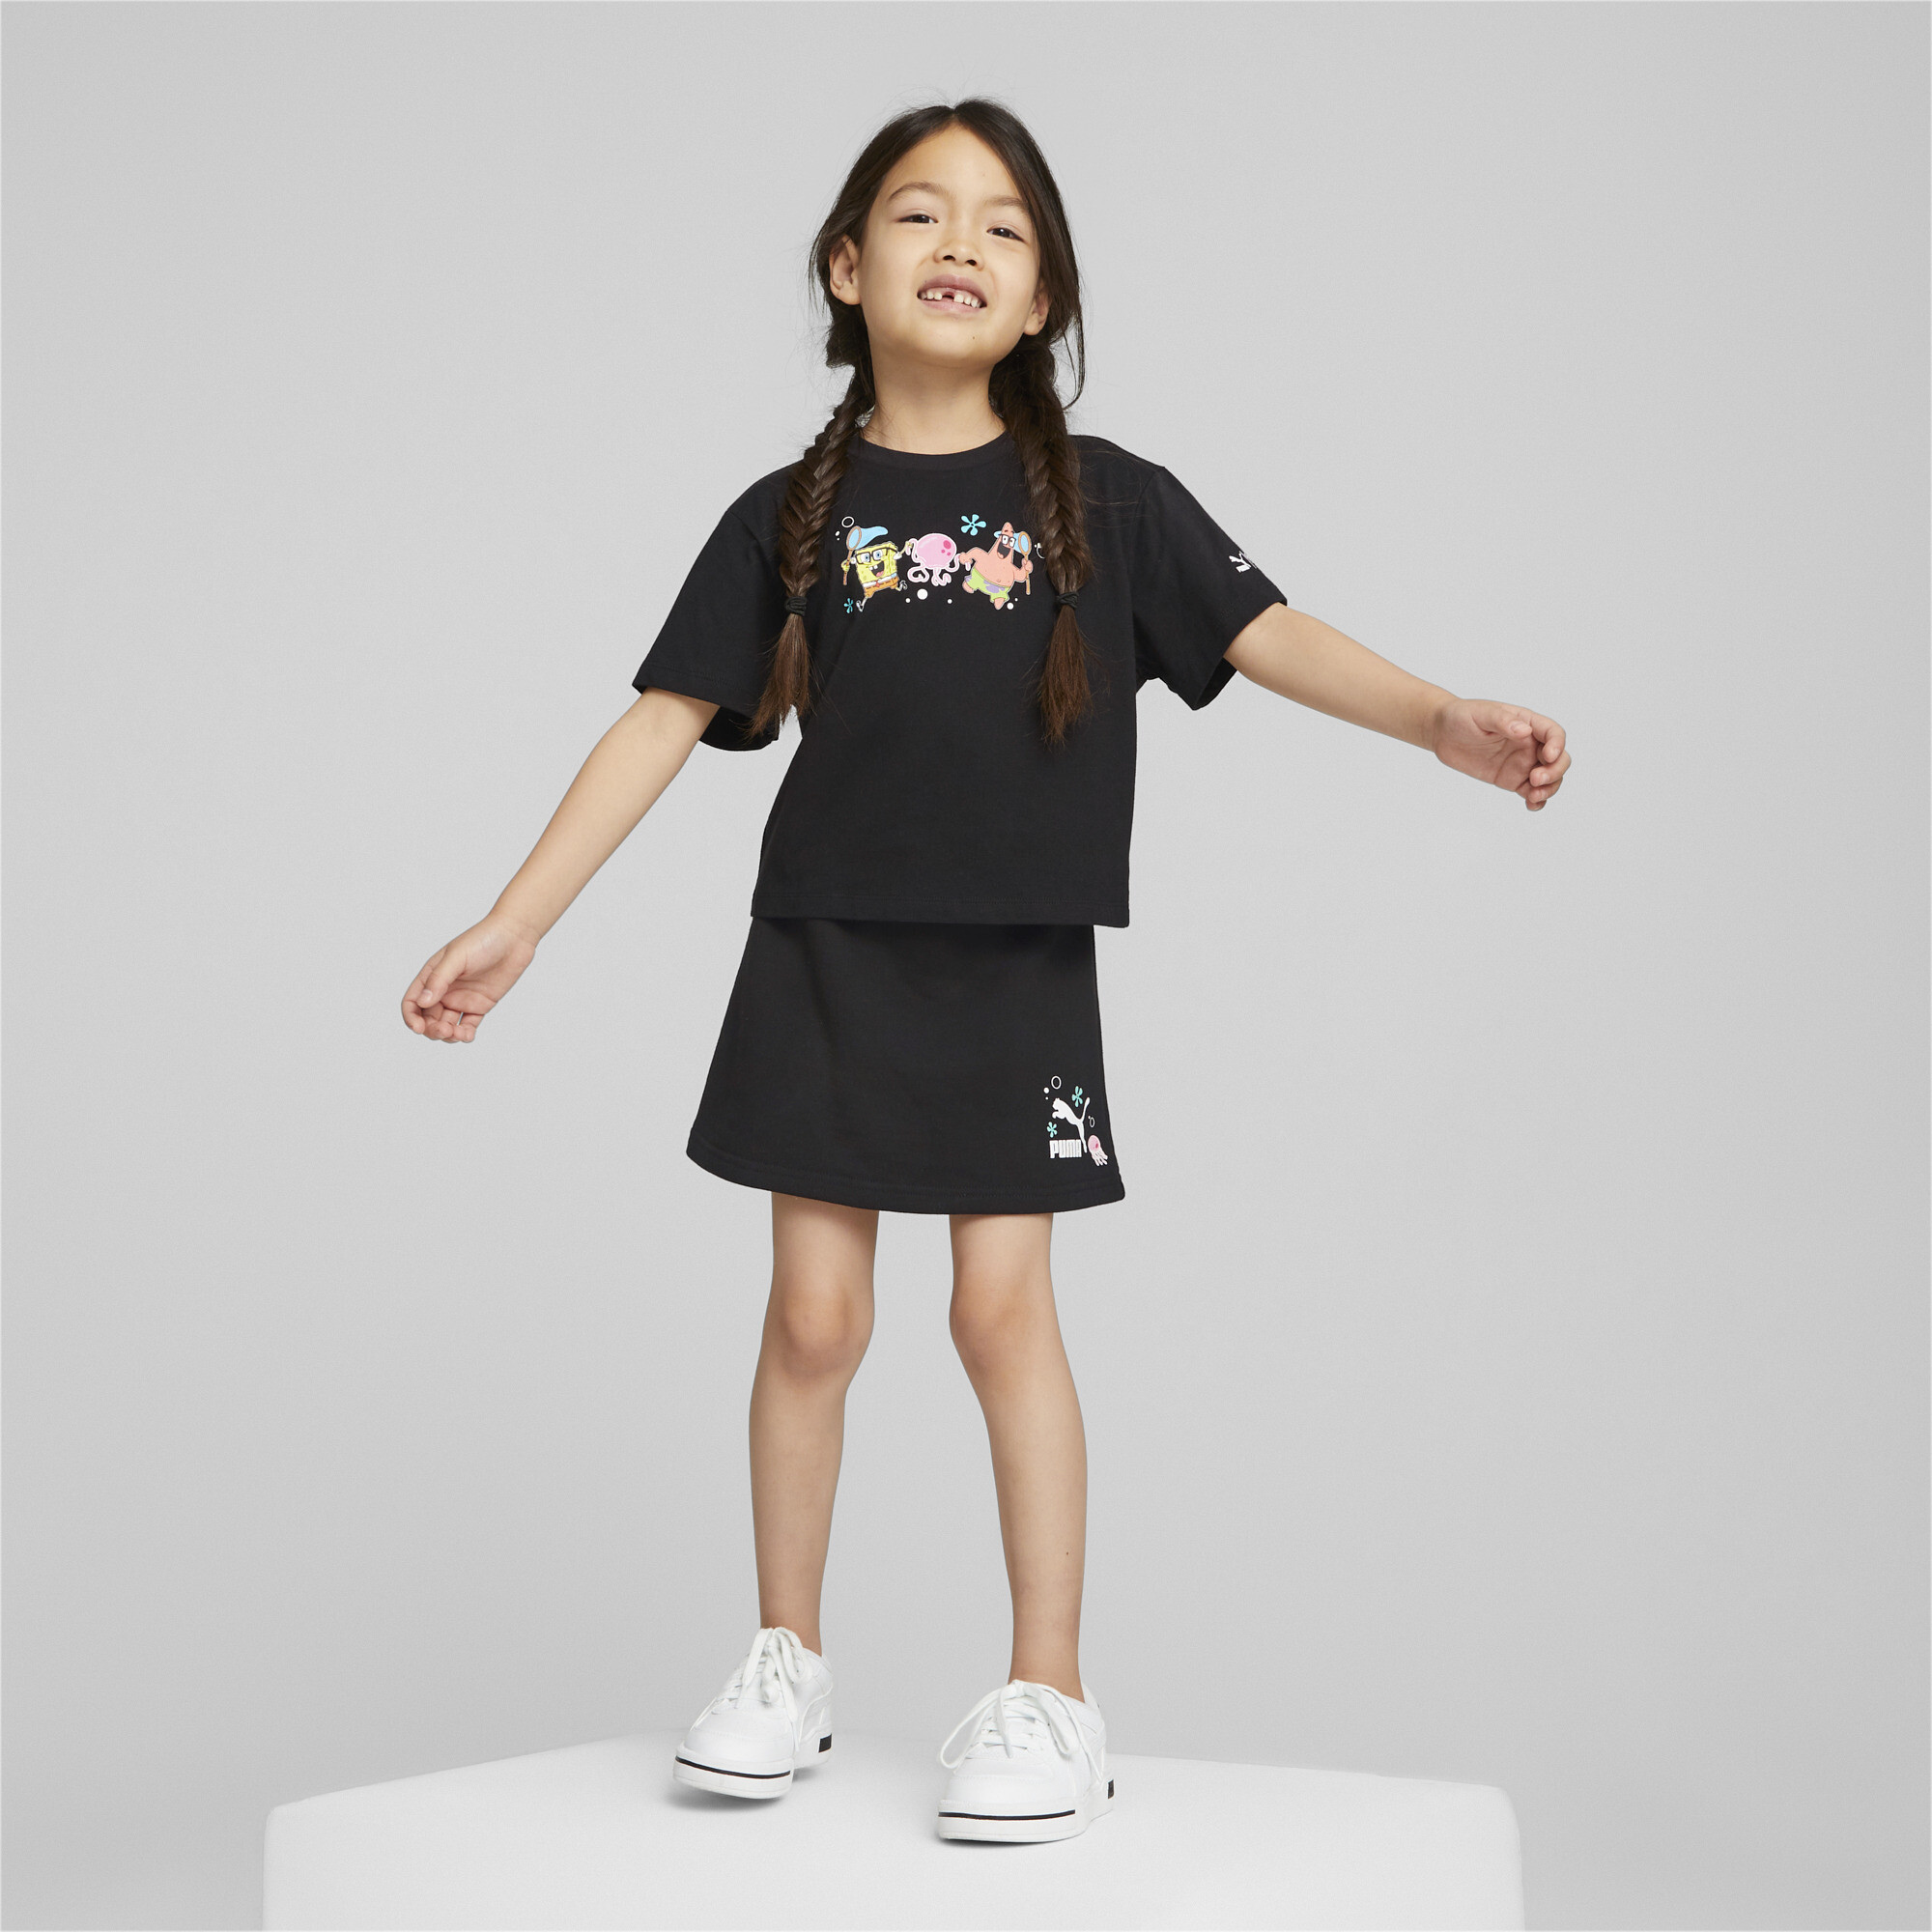 PUMA X SPONGEBOB Skirt Kids In Black, Size 11-12 Youth